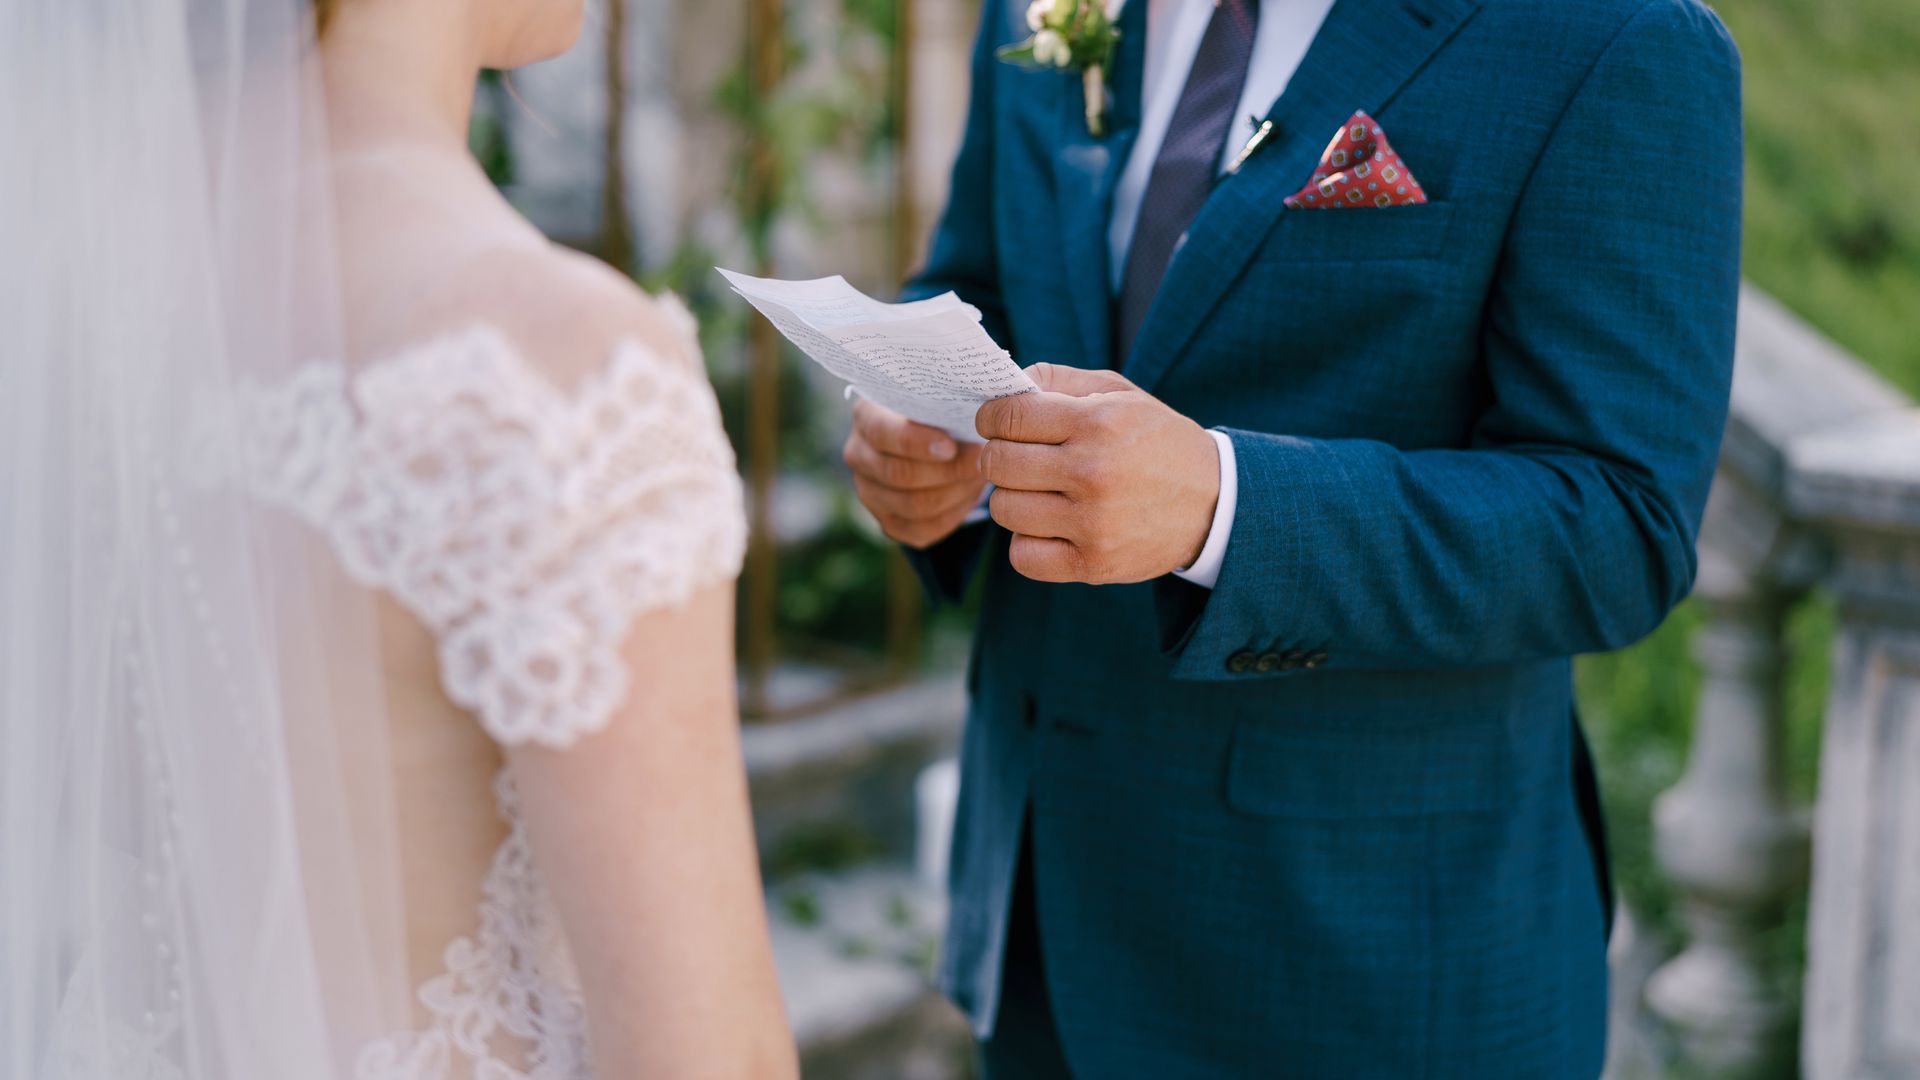 Wedding readings 19 ideas for a heartfelt and memorable ceremony HELLO! photo